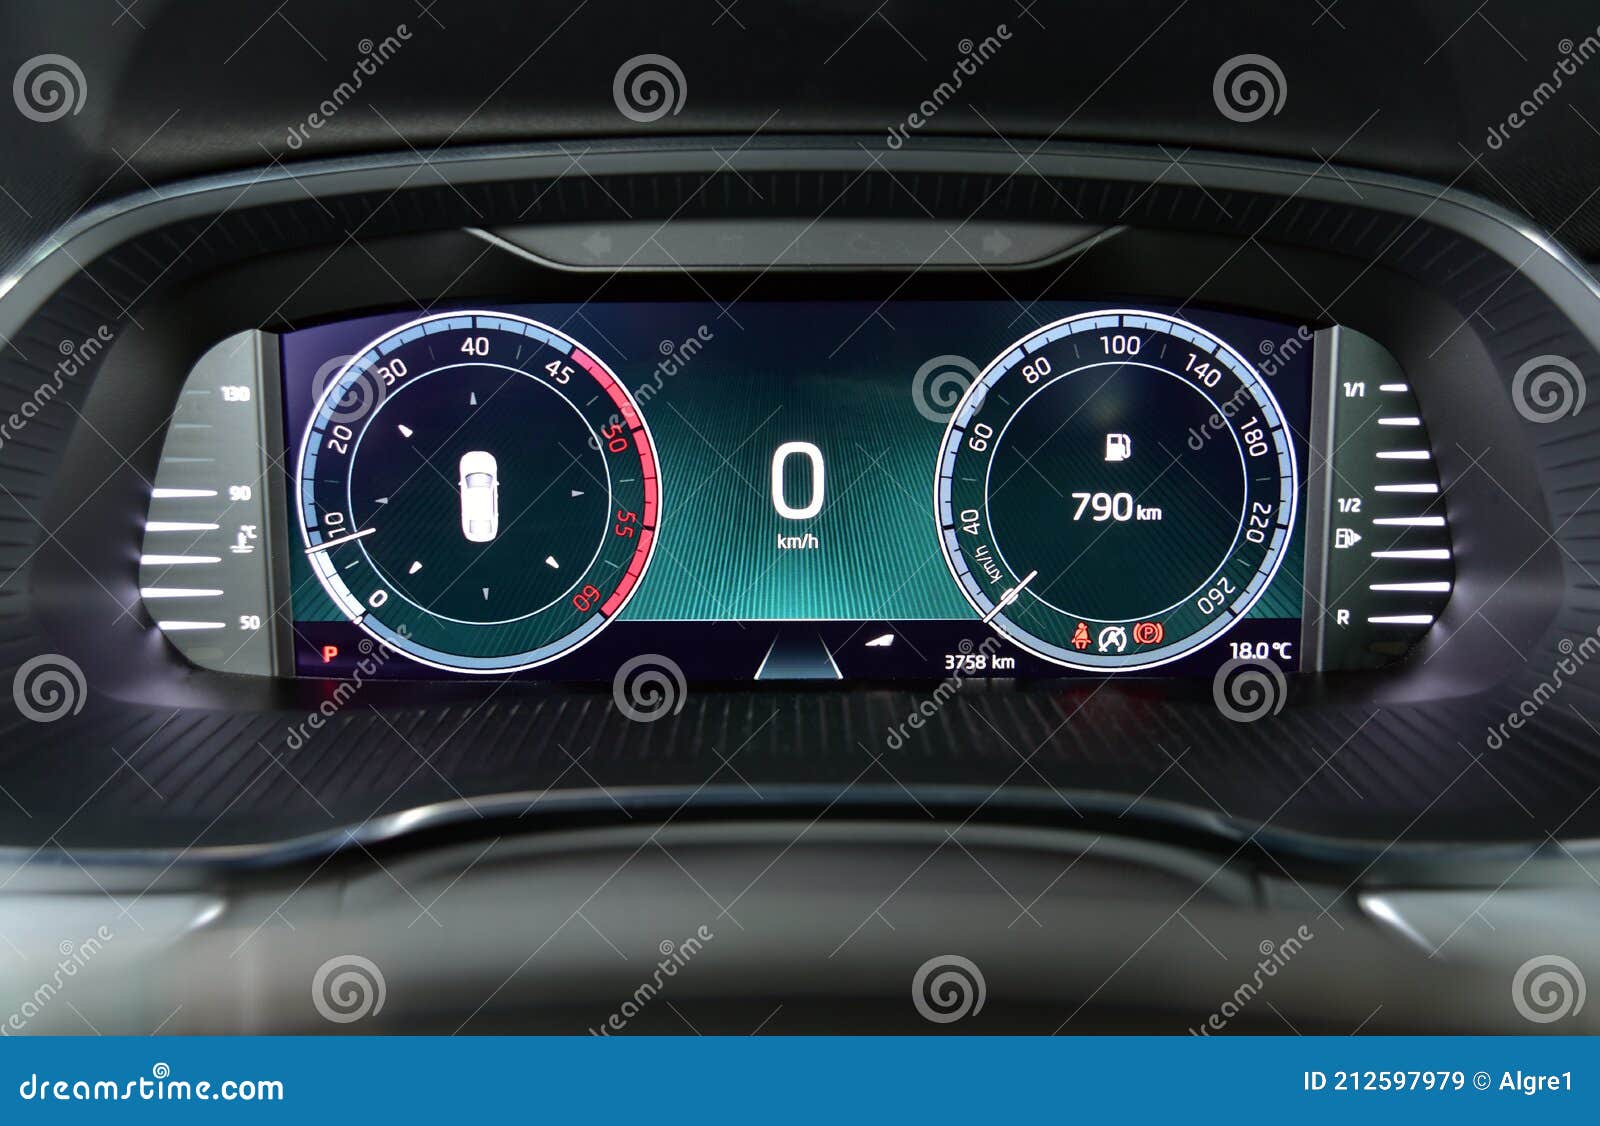 Digital Instrument Panel in a Modern Car Stock Image - Image of display,  motor: 212597979